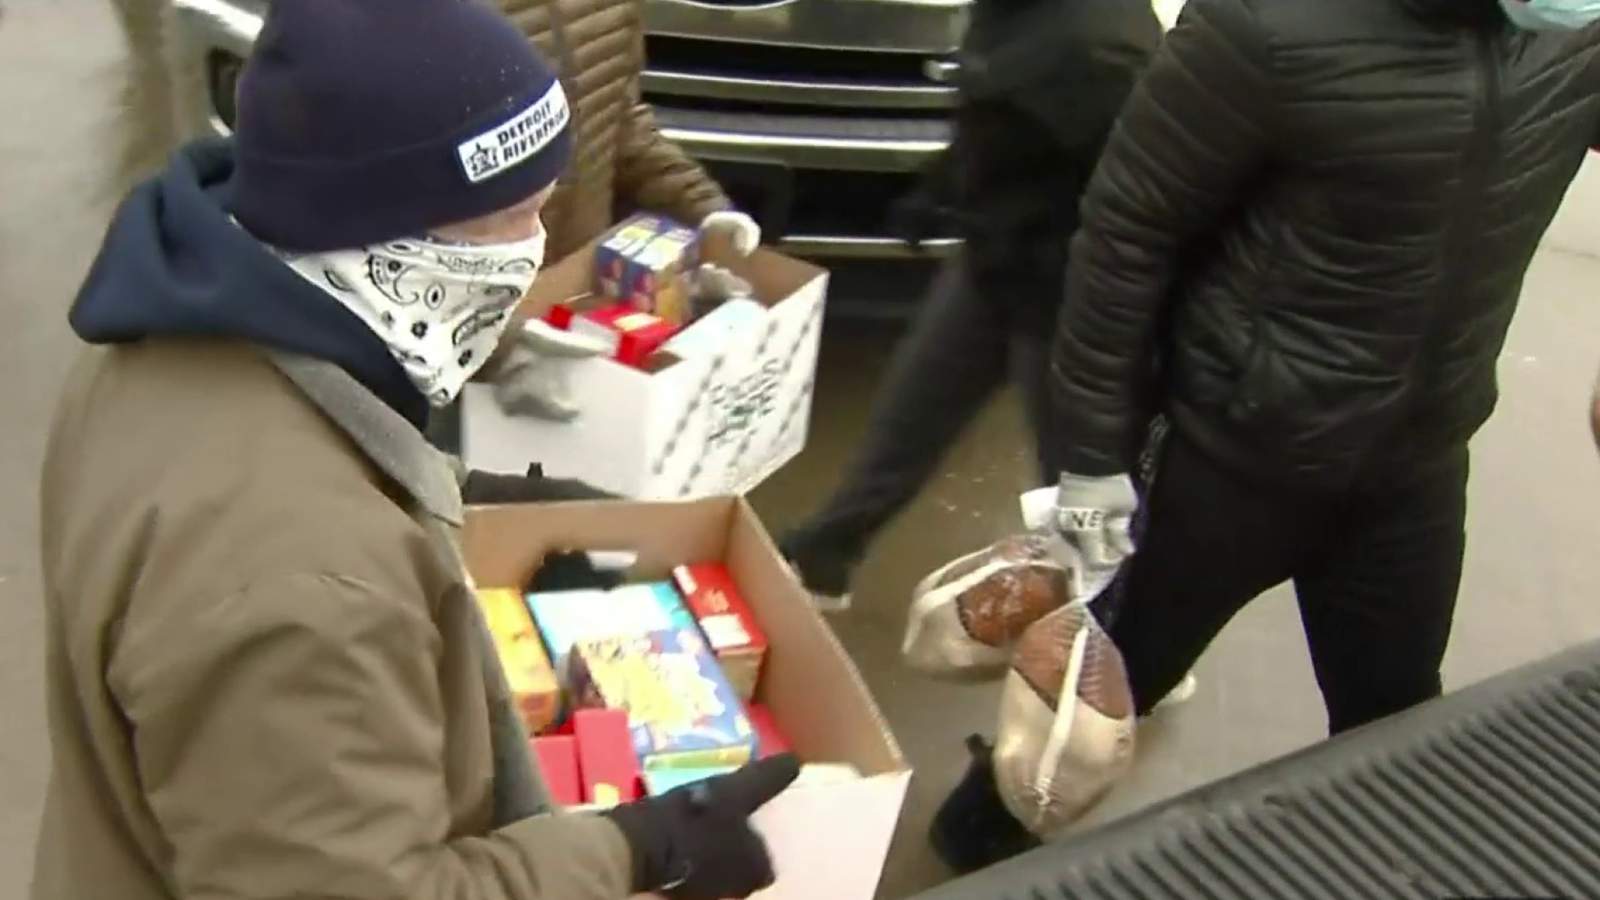 Focus: HOPE donates thousands of meals to seniors across Metro Detroit